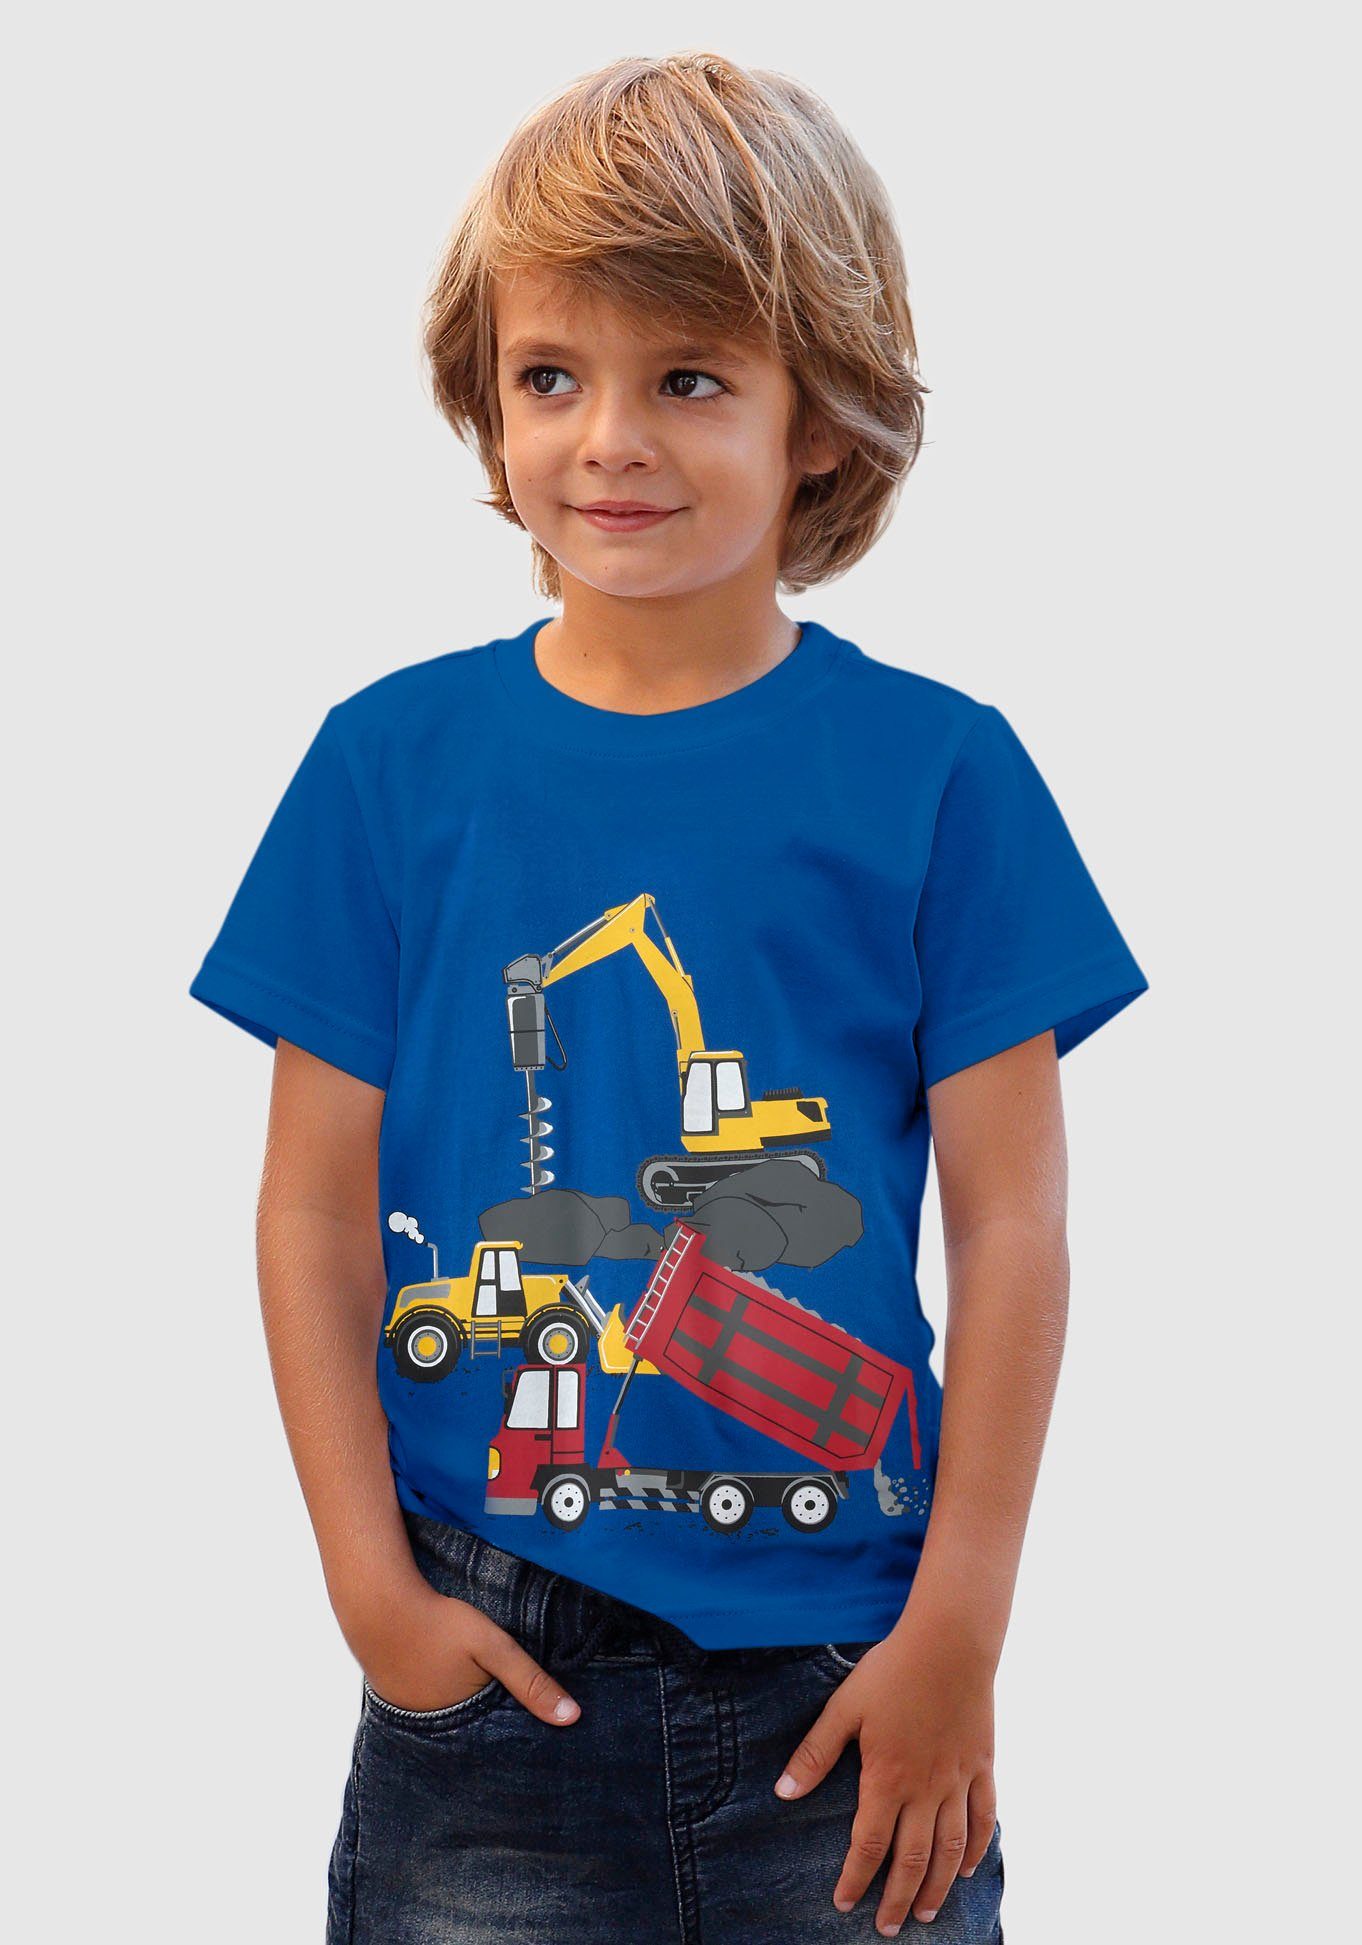 BAUMASCHINEN KIDSWORLD T-Shirt Spruch